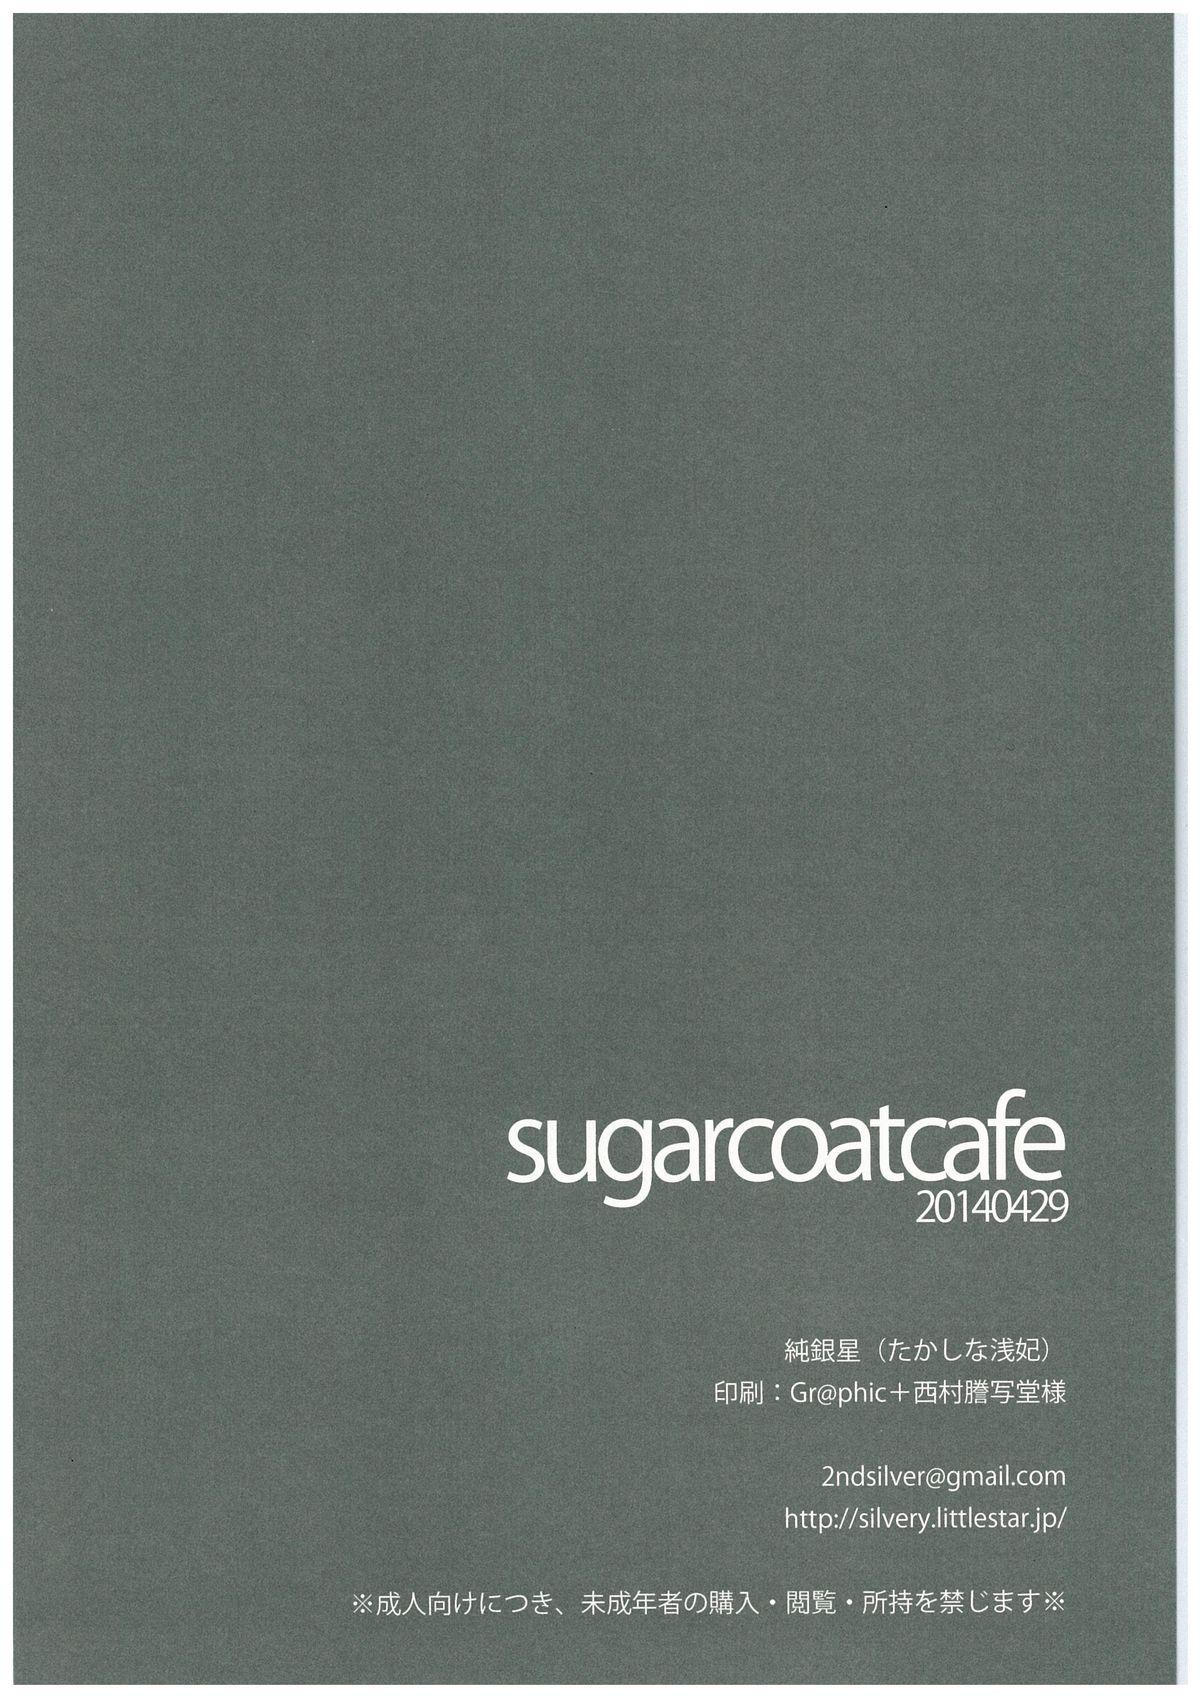 sugarcoatcafe 17